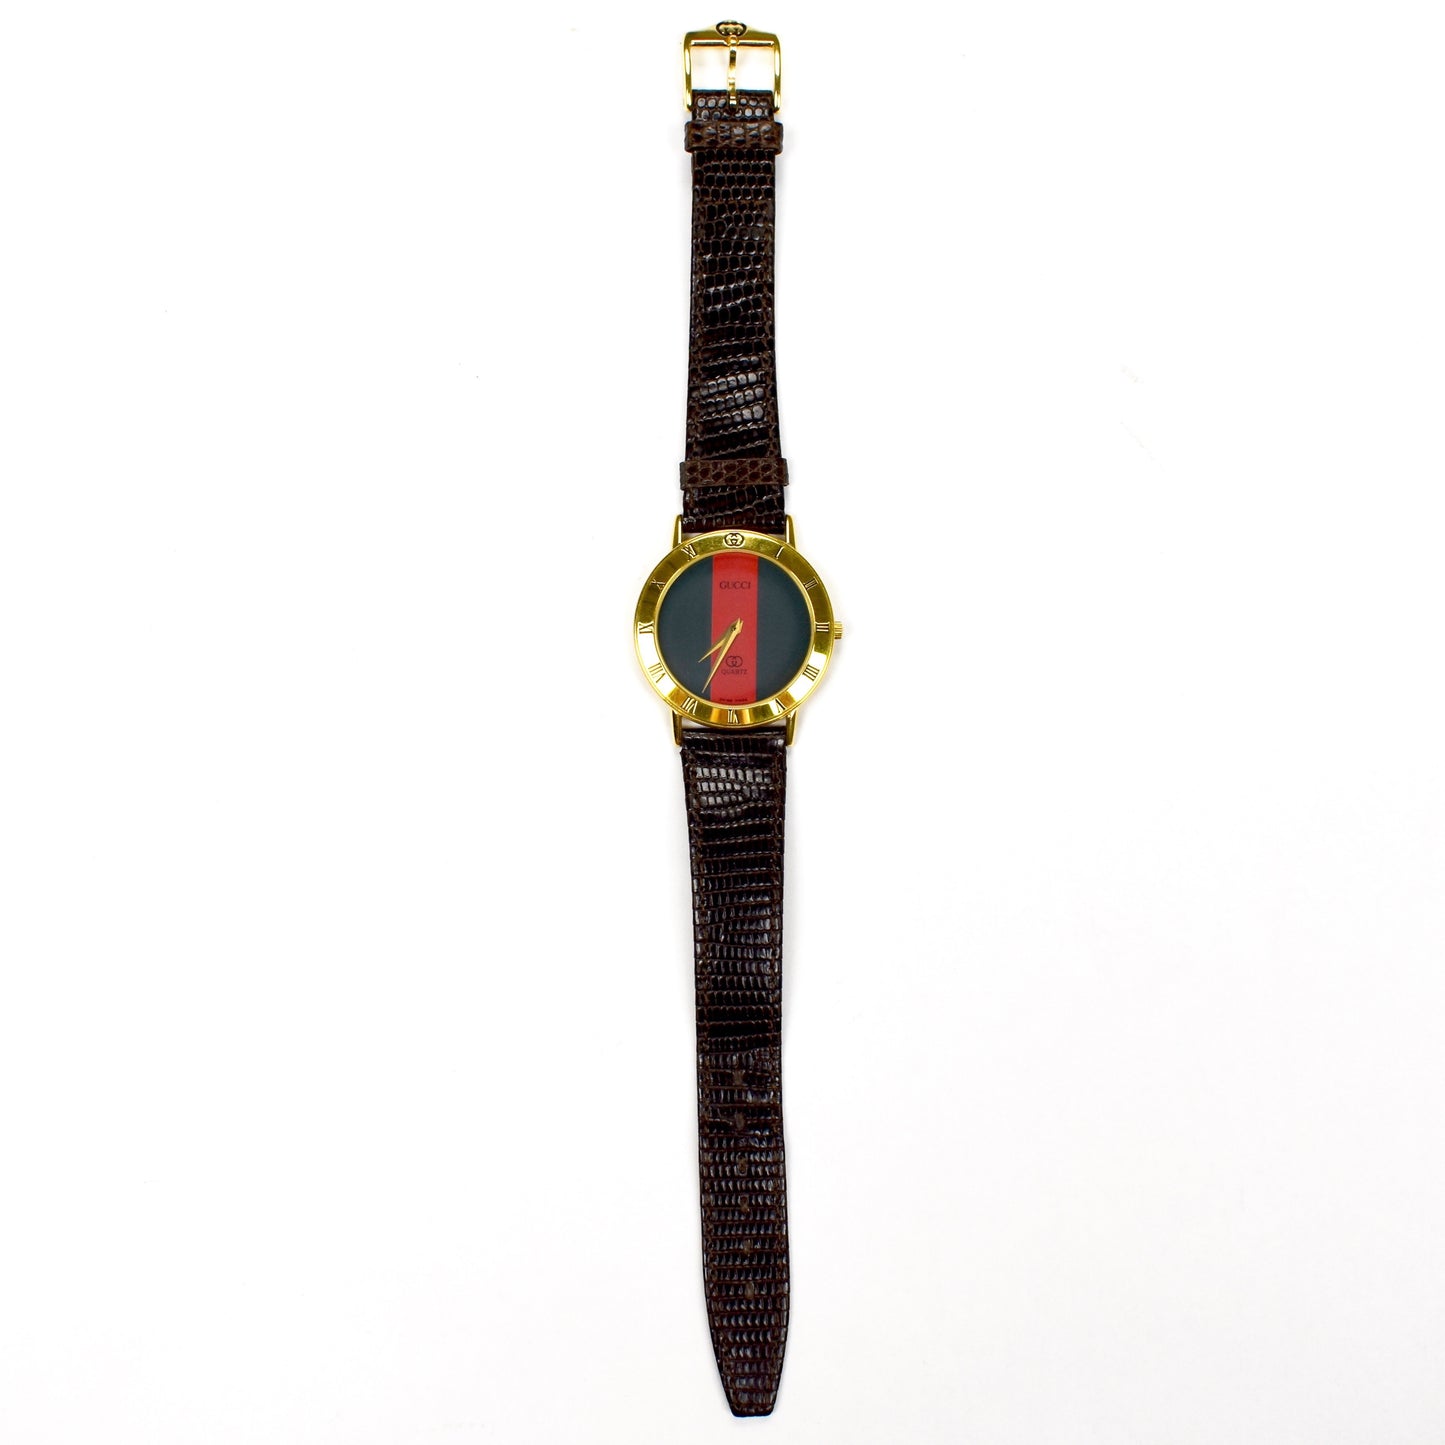 Gucci - 3000M Gold Web Stripe Watch (1987)